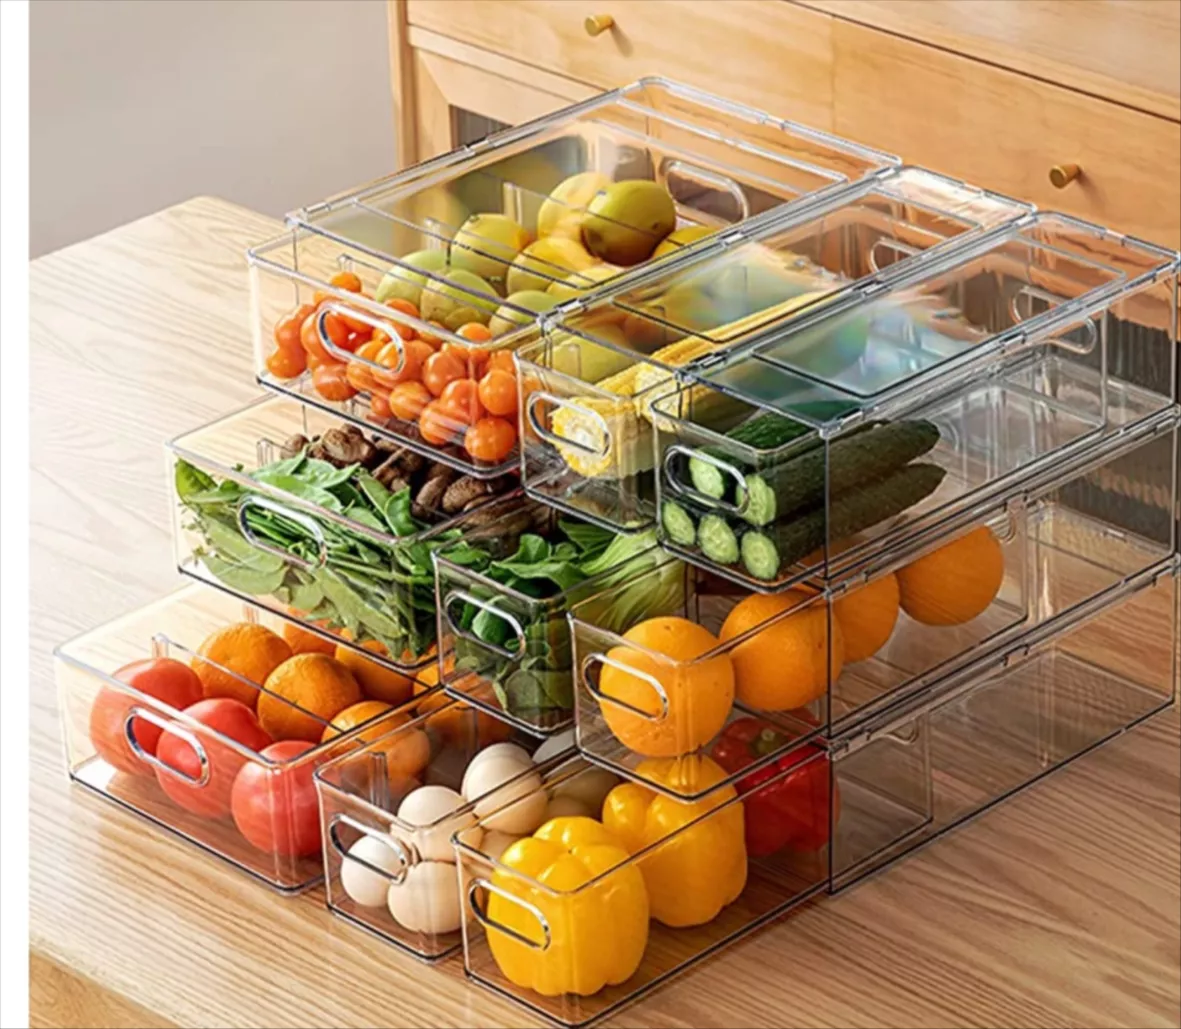 Clear Plastic Refrigerator Organizer Bins - Stackable Fridge